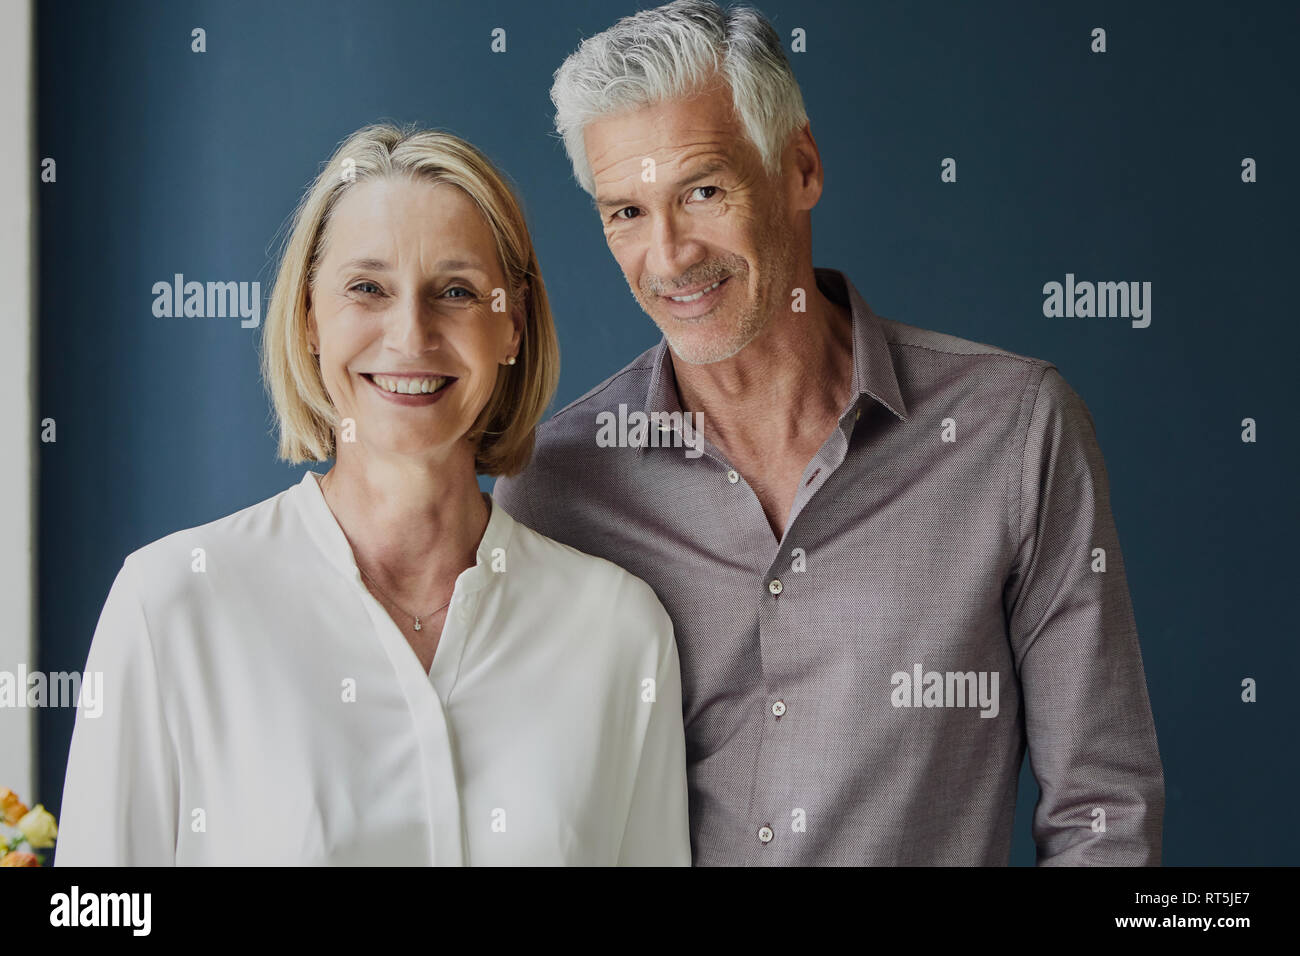 Portrait of smiling mature couple Stock Photo